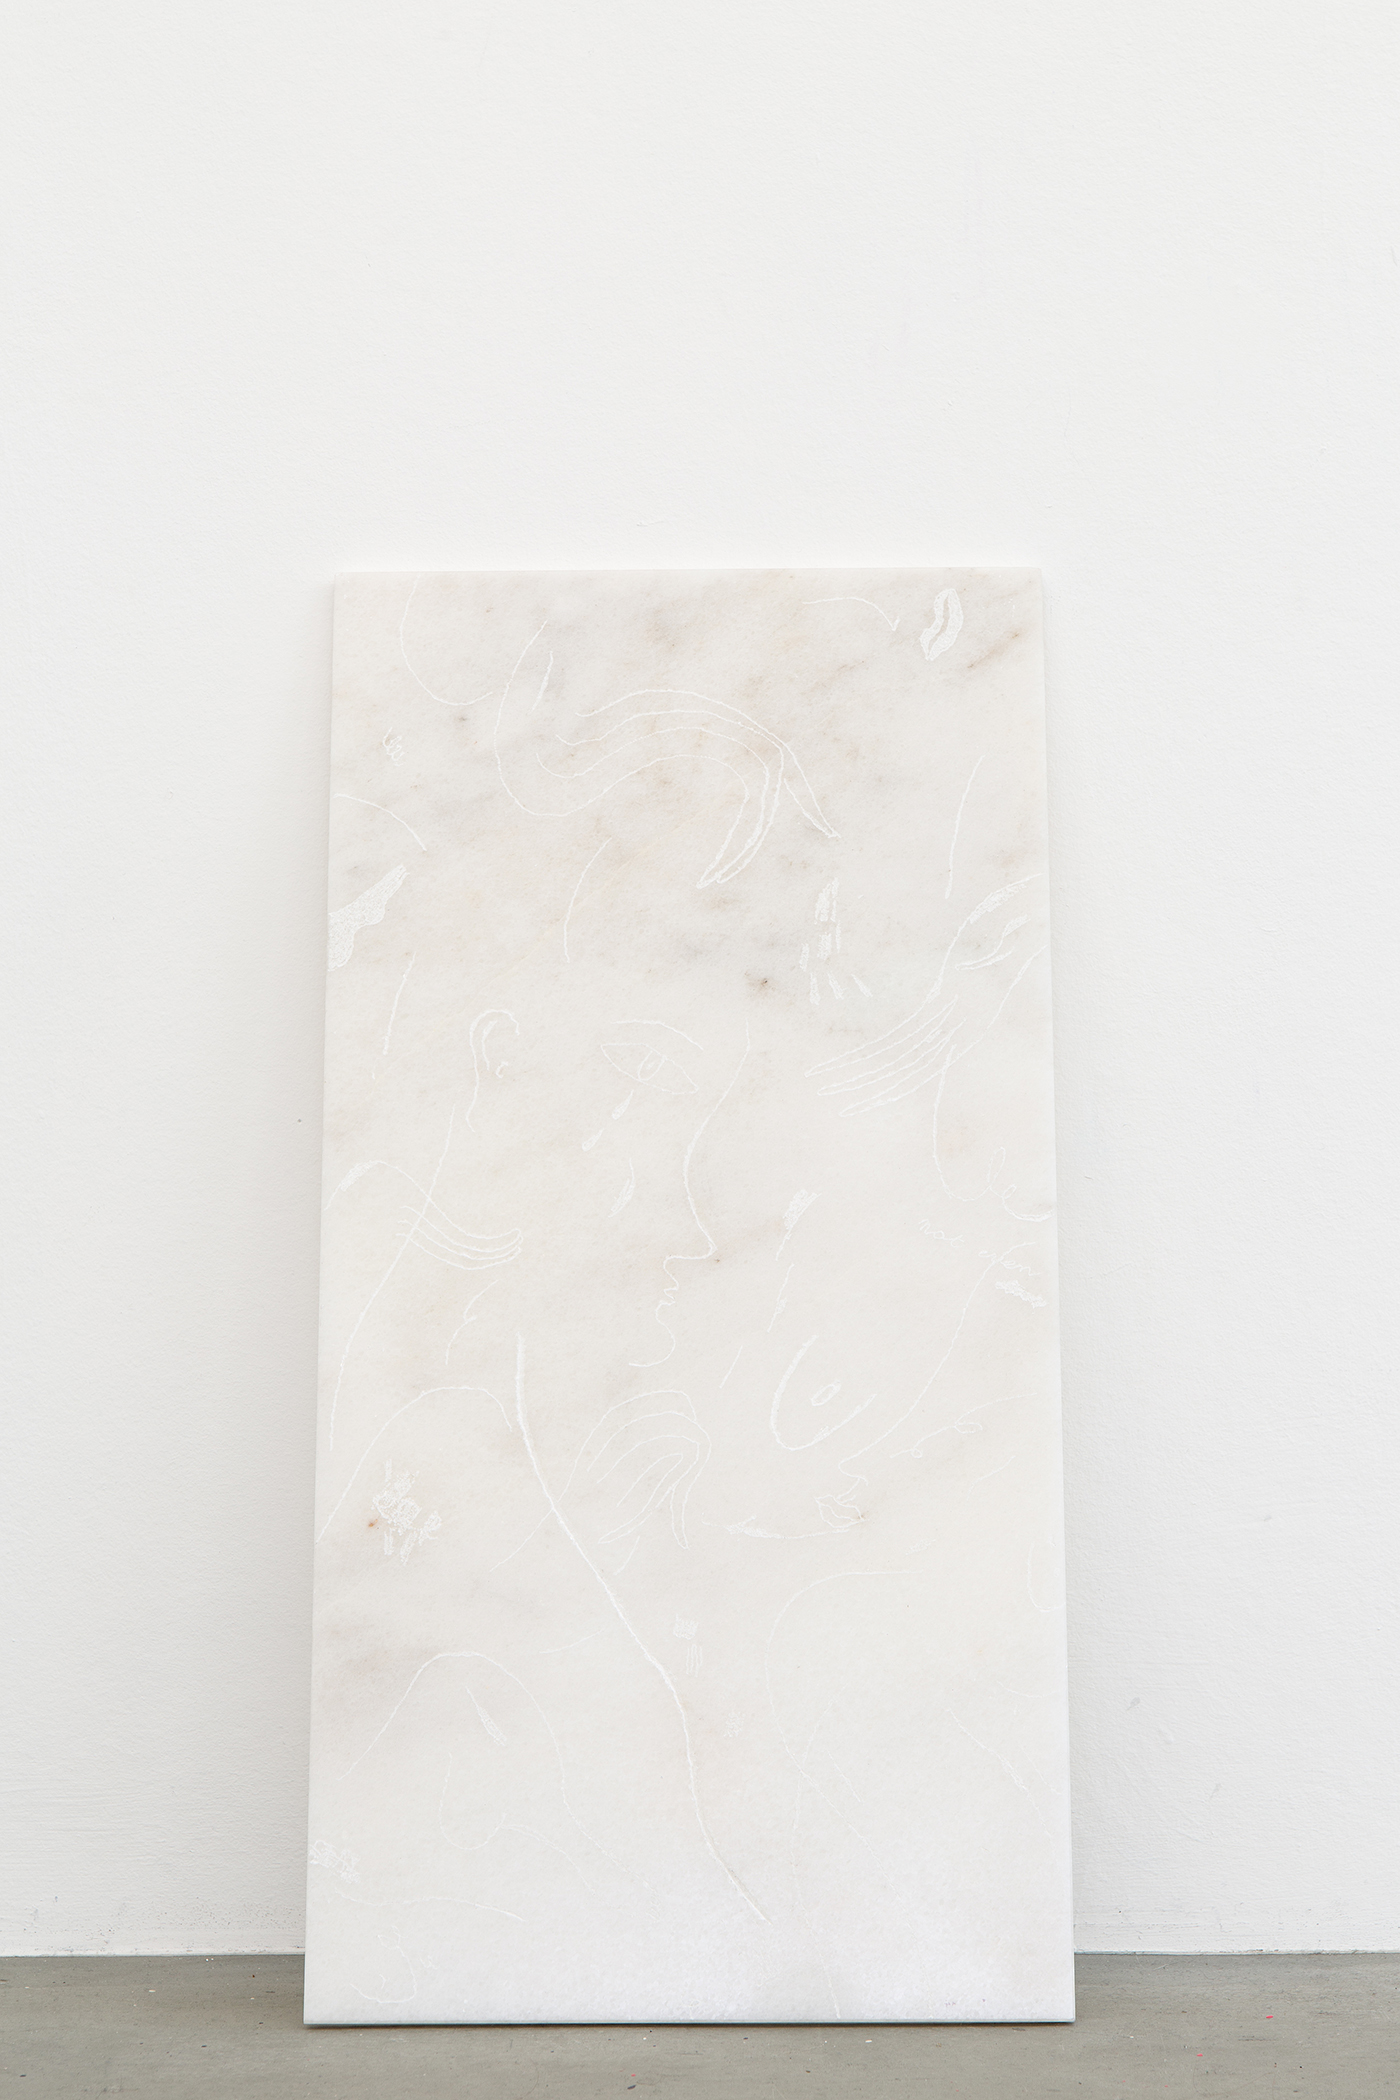  Alina Vergnano,  Slippery Slope , 2019, Marble, engraving, 62 x 25 cm 